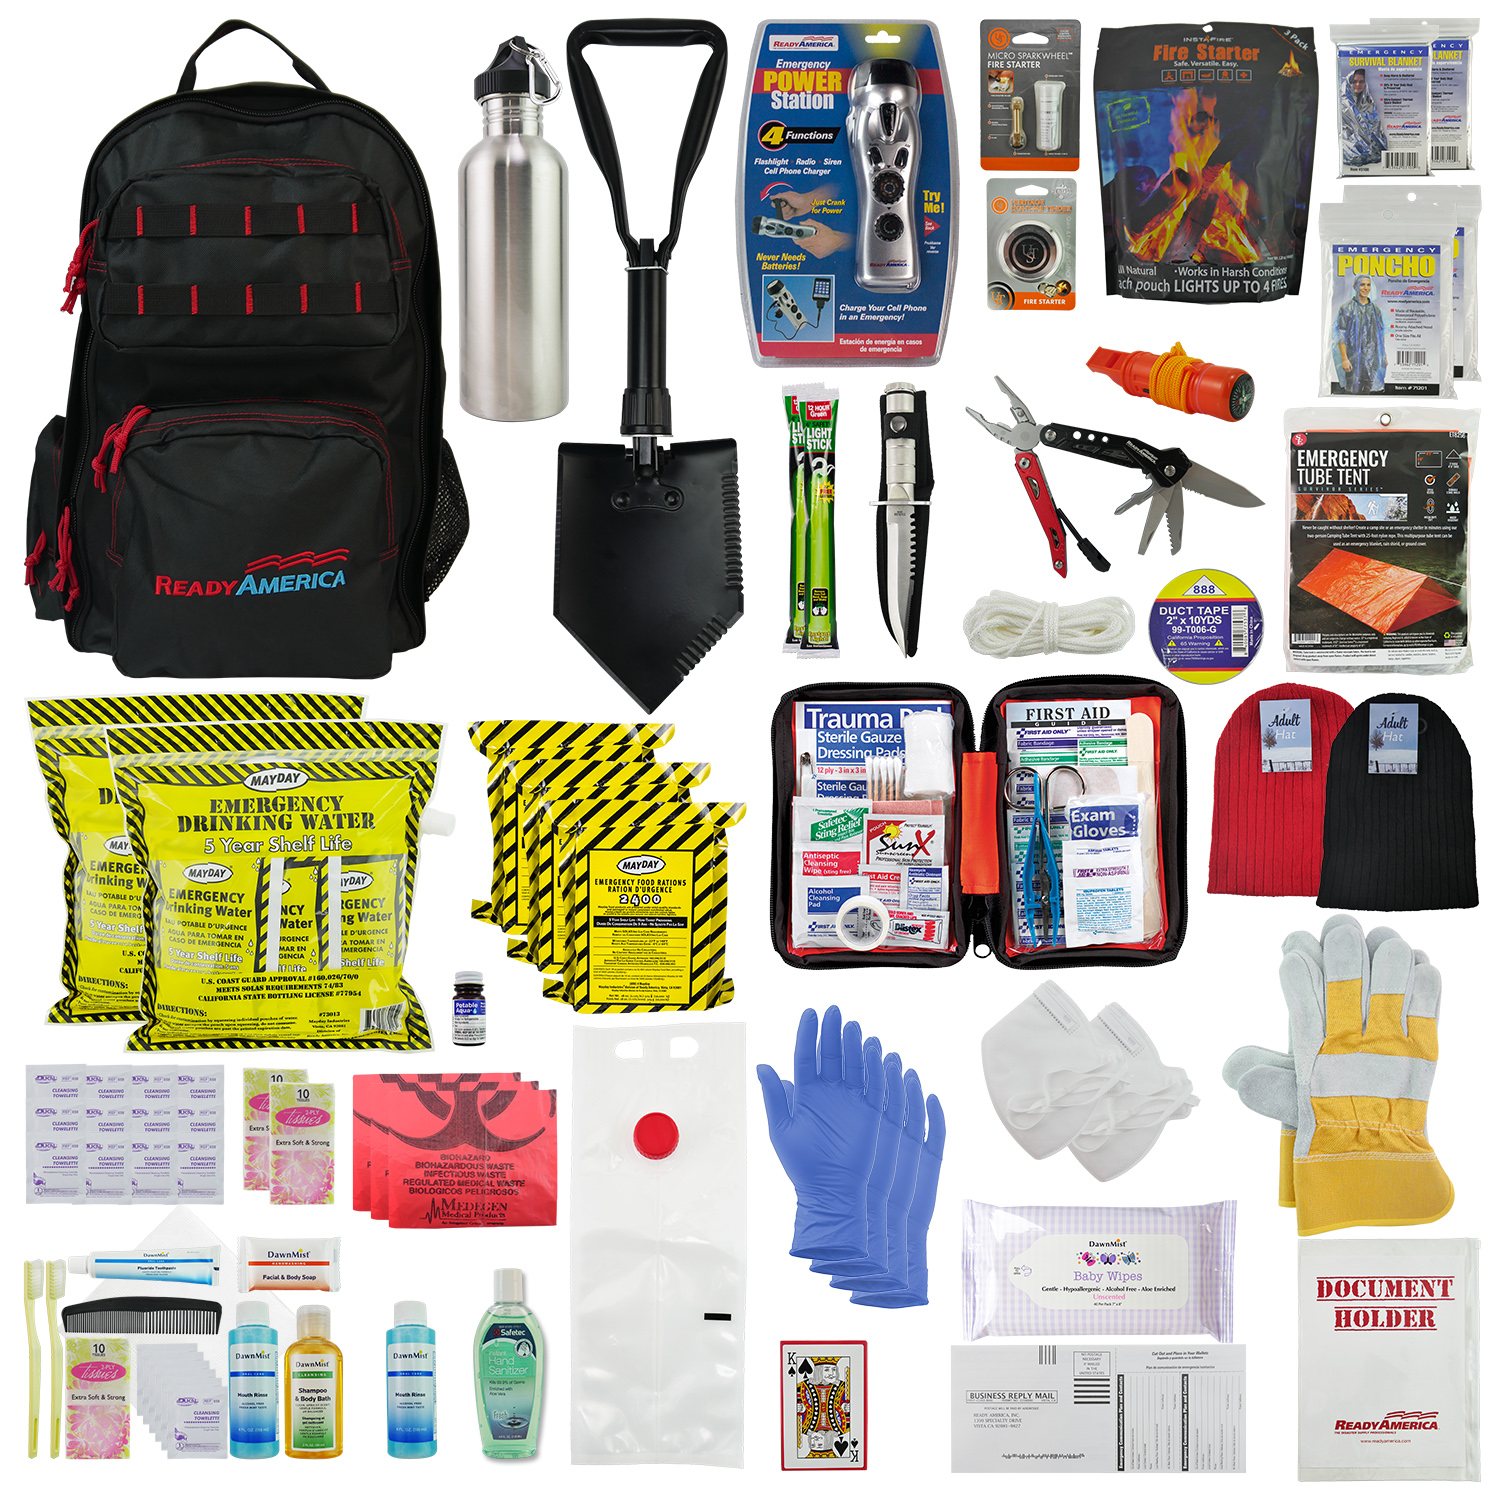 Elite Bags Light Emergency Bag, Emergency Kit, Red